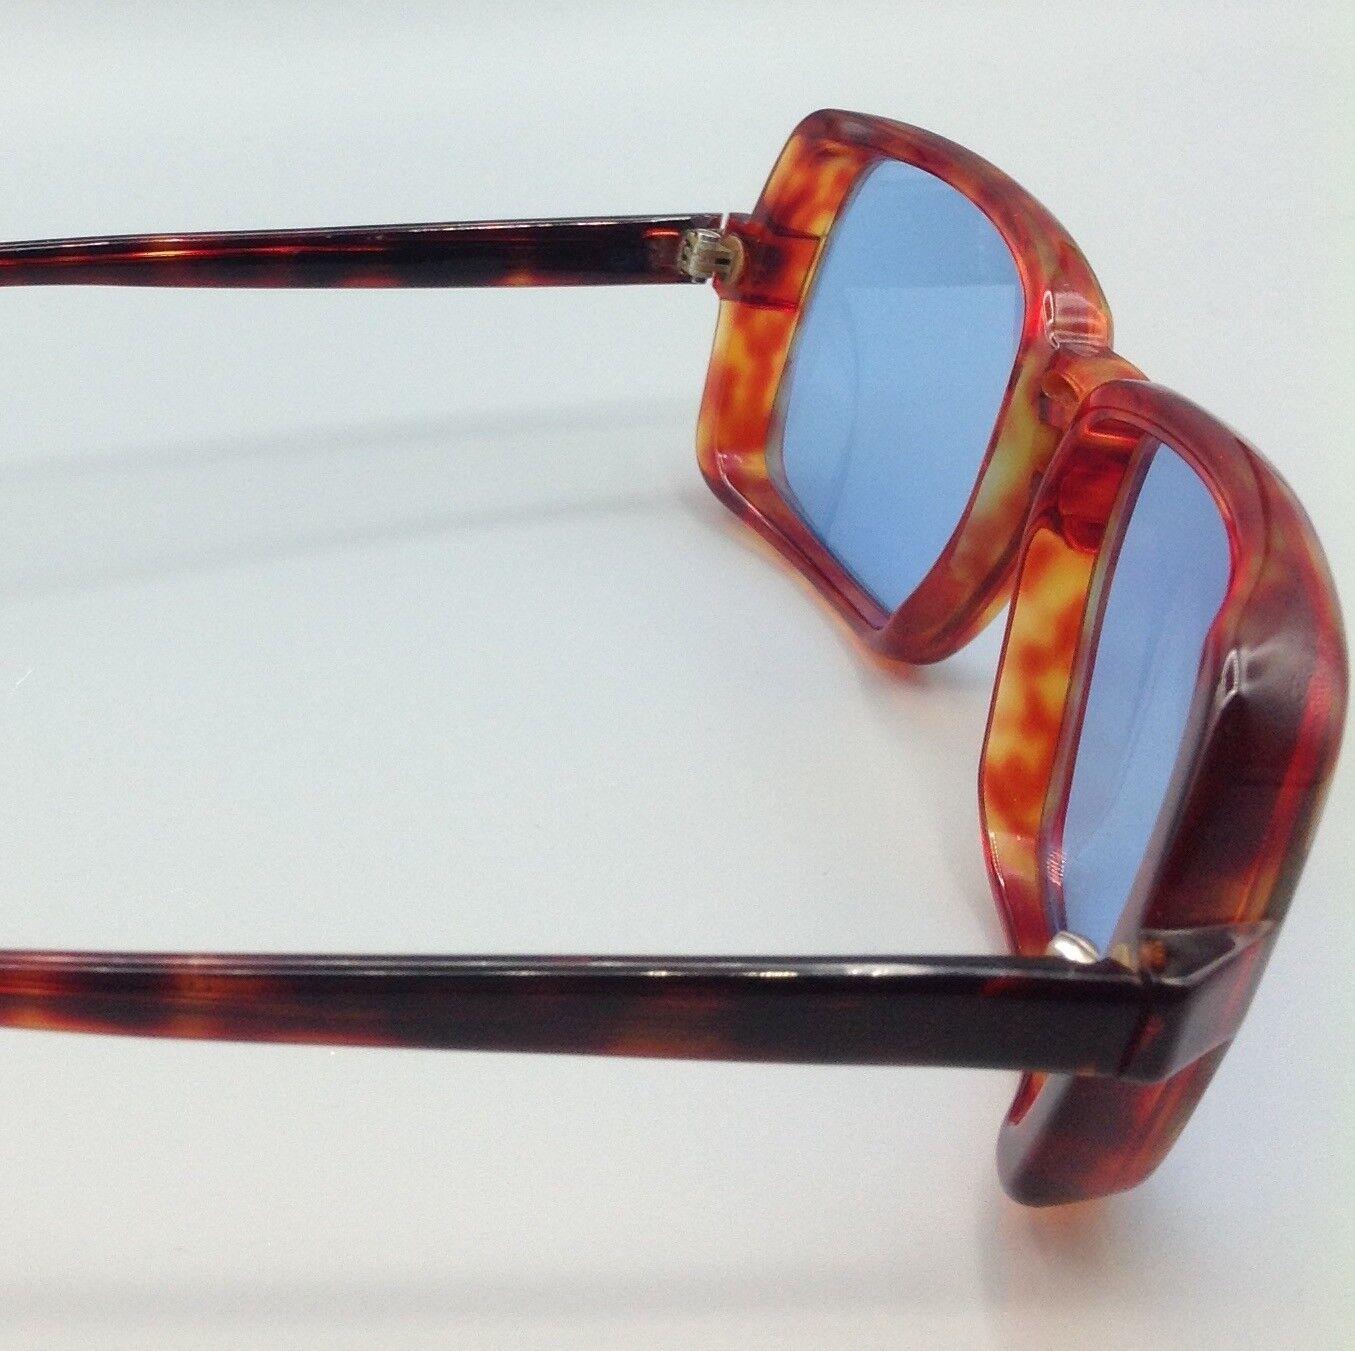 SILHOUETTE occhiale vintage made in Austria SUNGLASSES LUNETTES SONNENBRILLEN